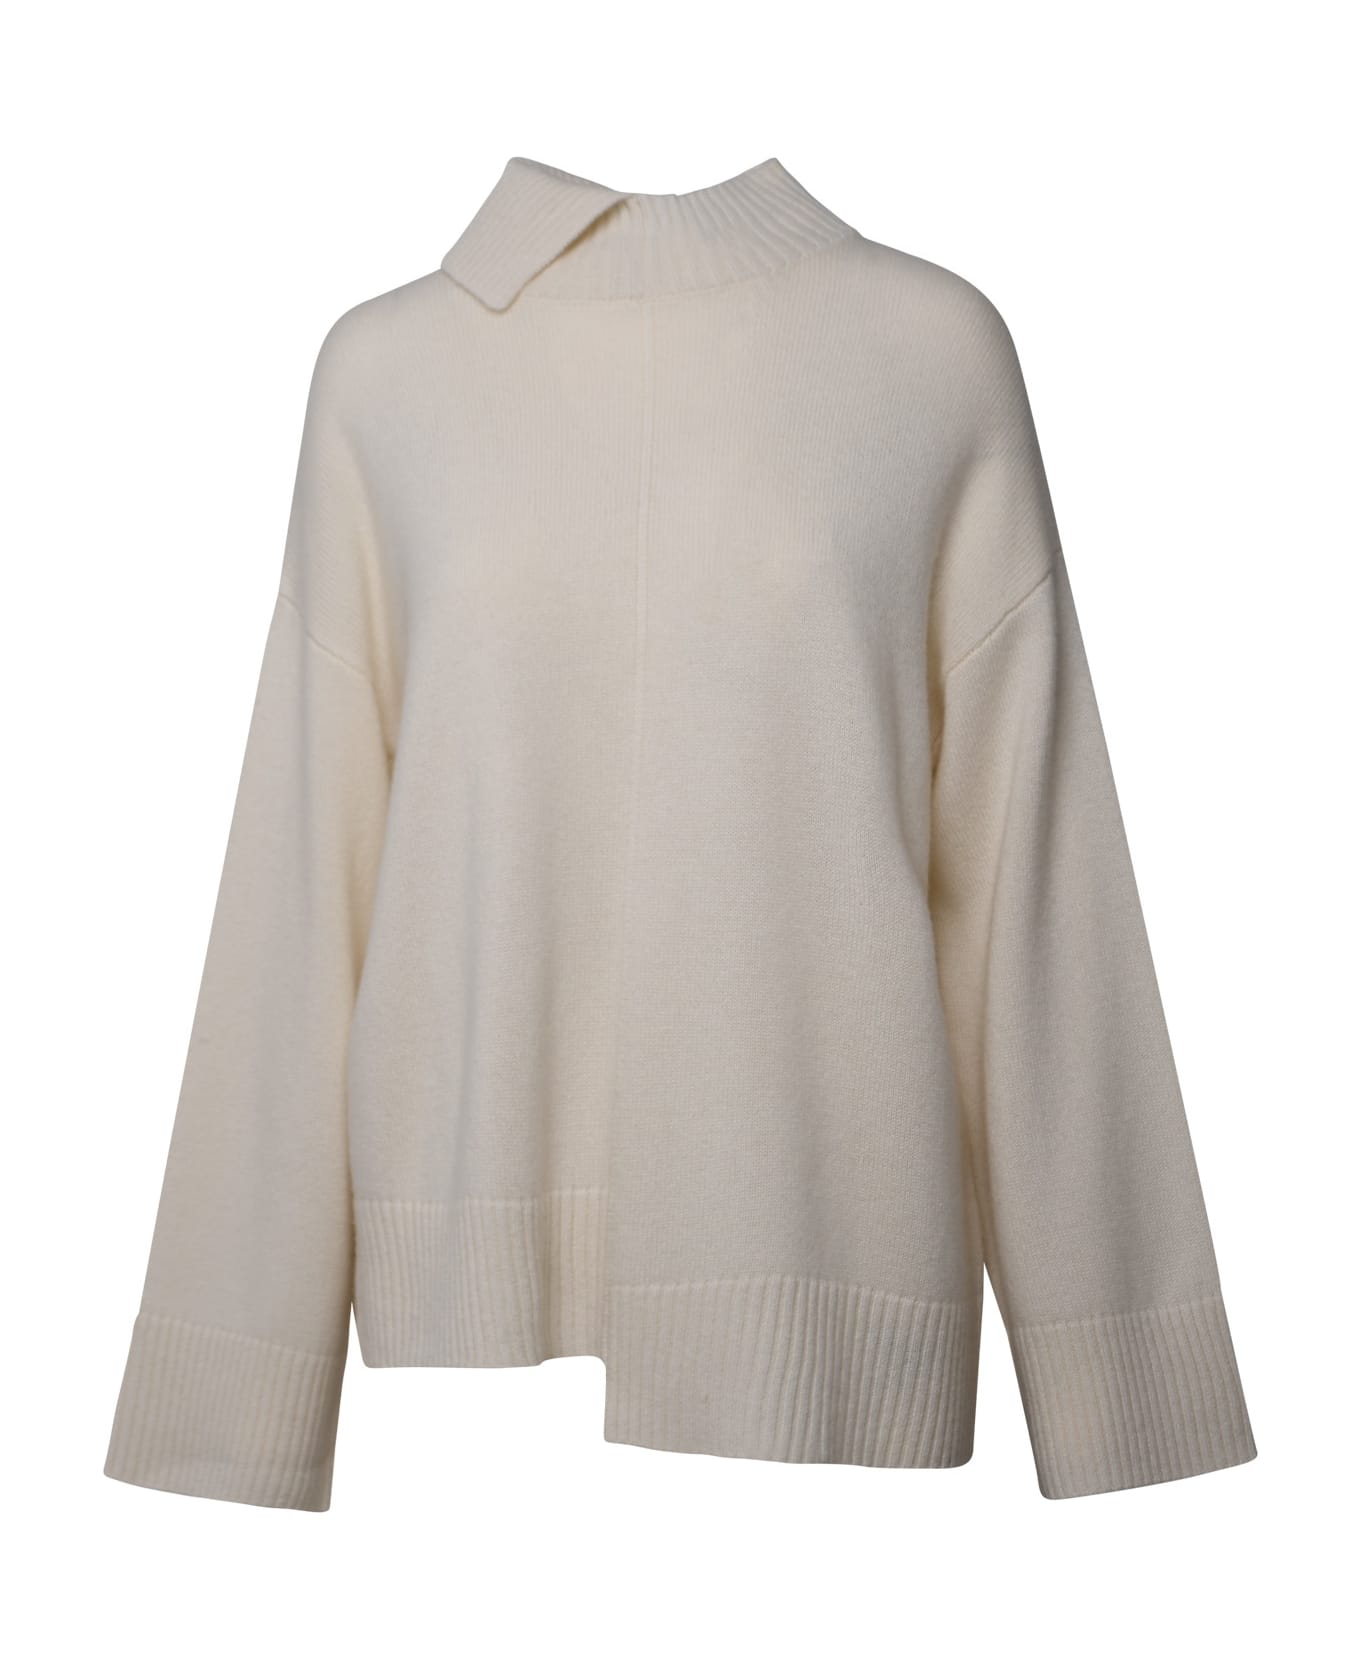 Parosh Cream Cashmere Blend Sweater - Cream